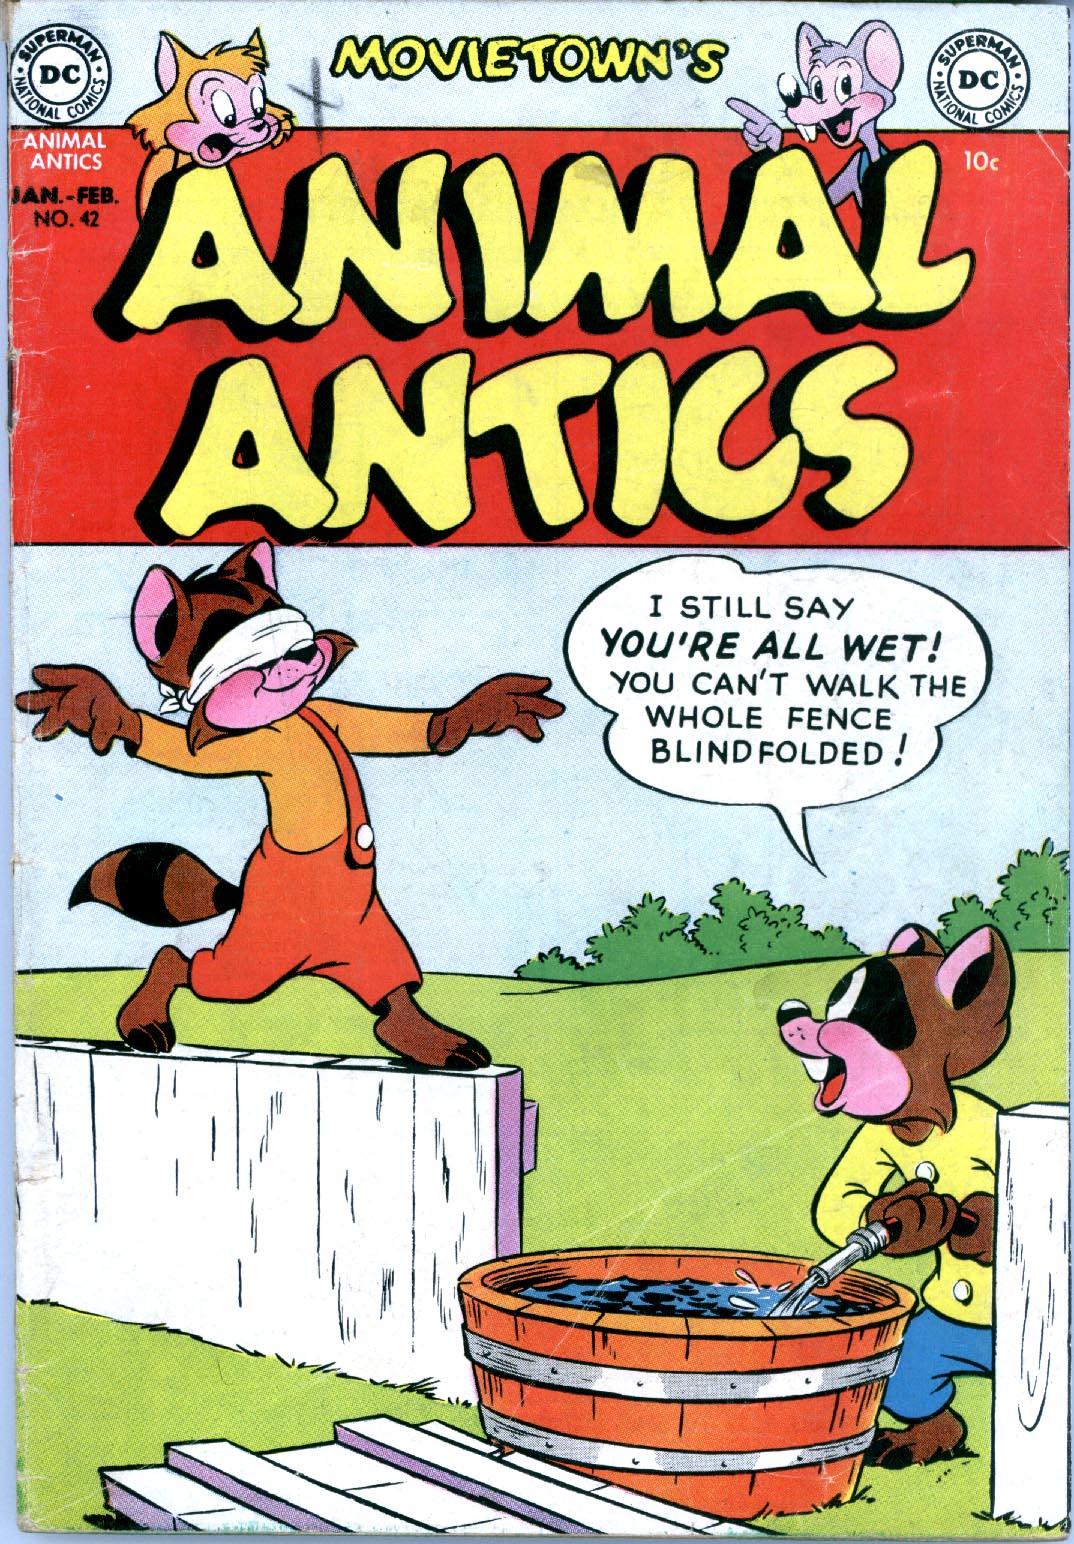 Movietown's Animal Antics Vol. 1 #42